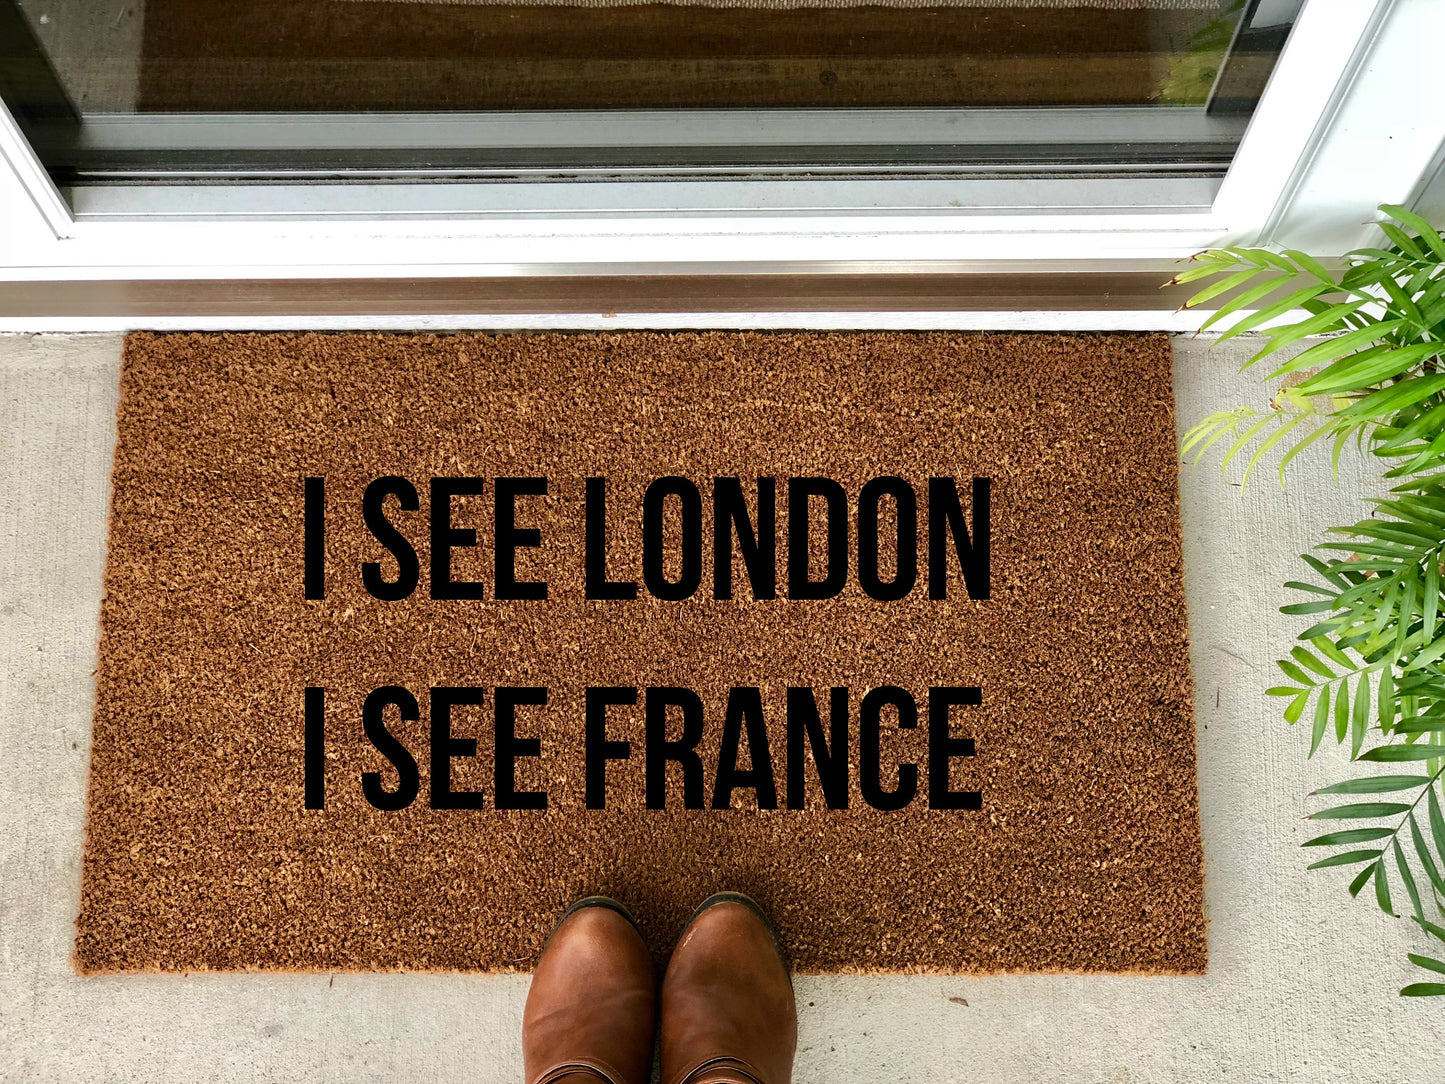 I See London, I See France - The Minted Grove